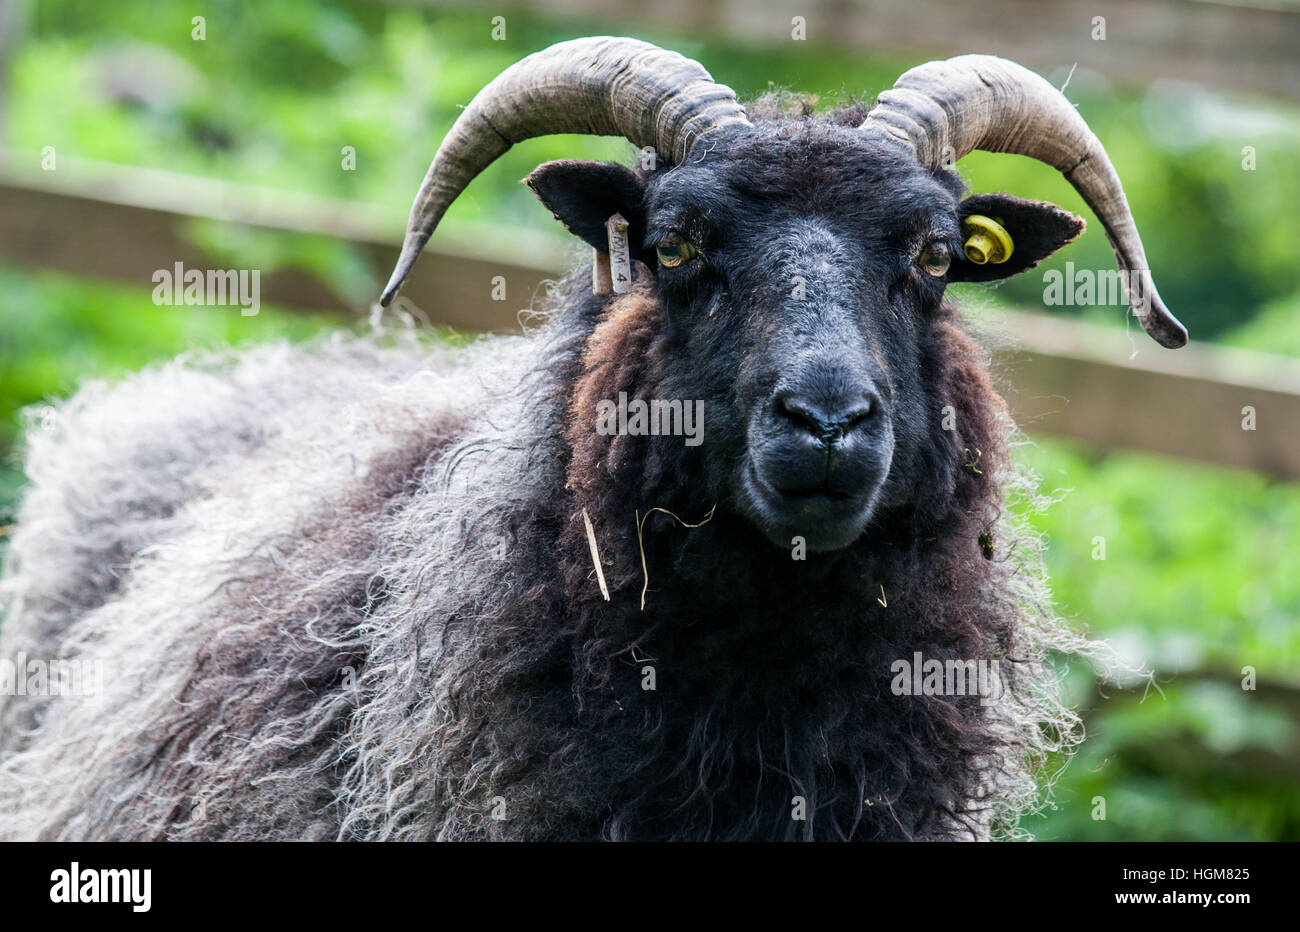 Black horned Sheep Stock Photo